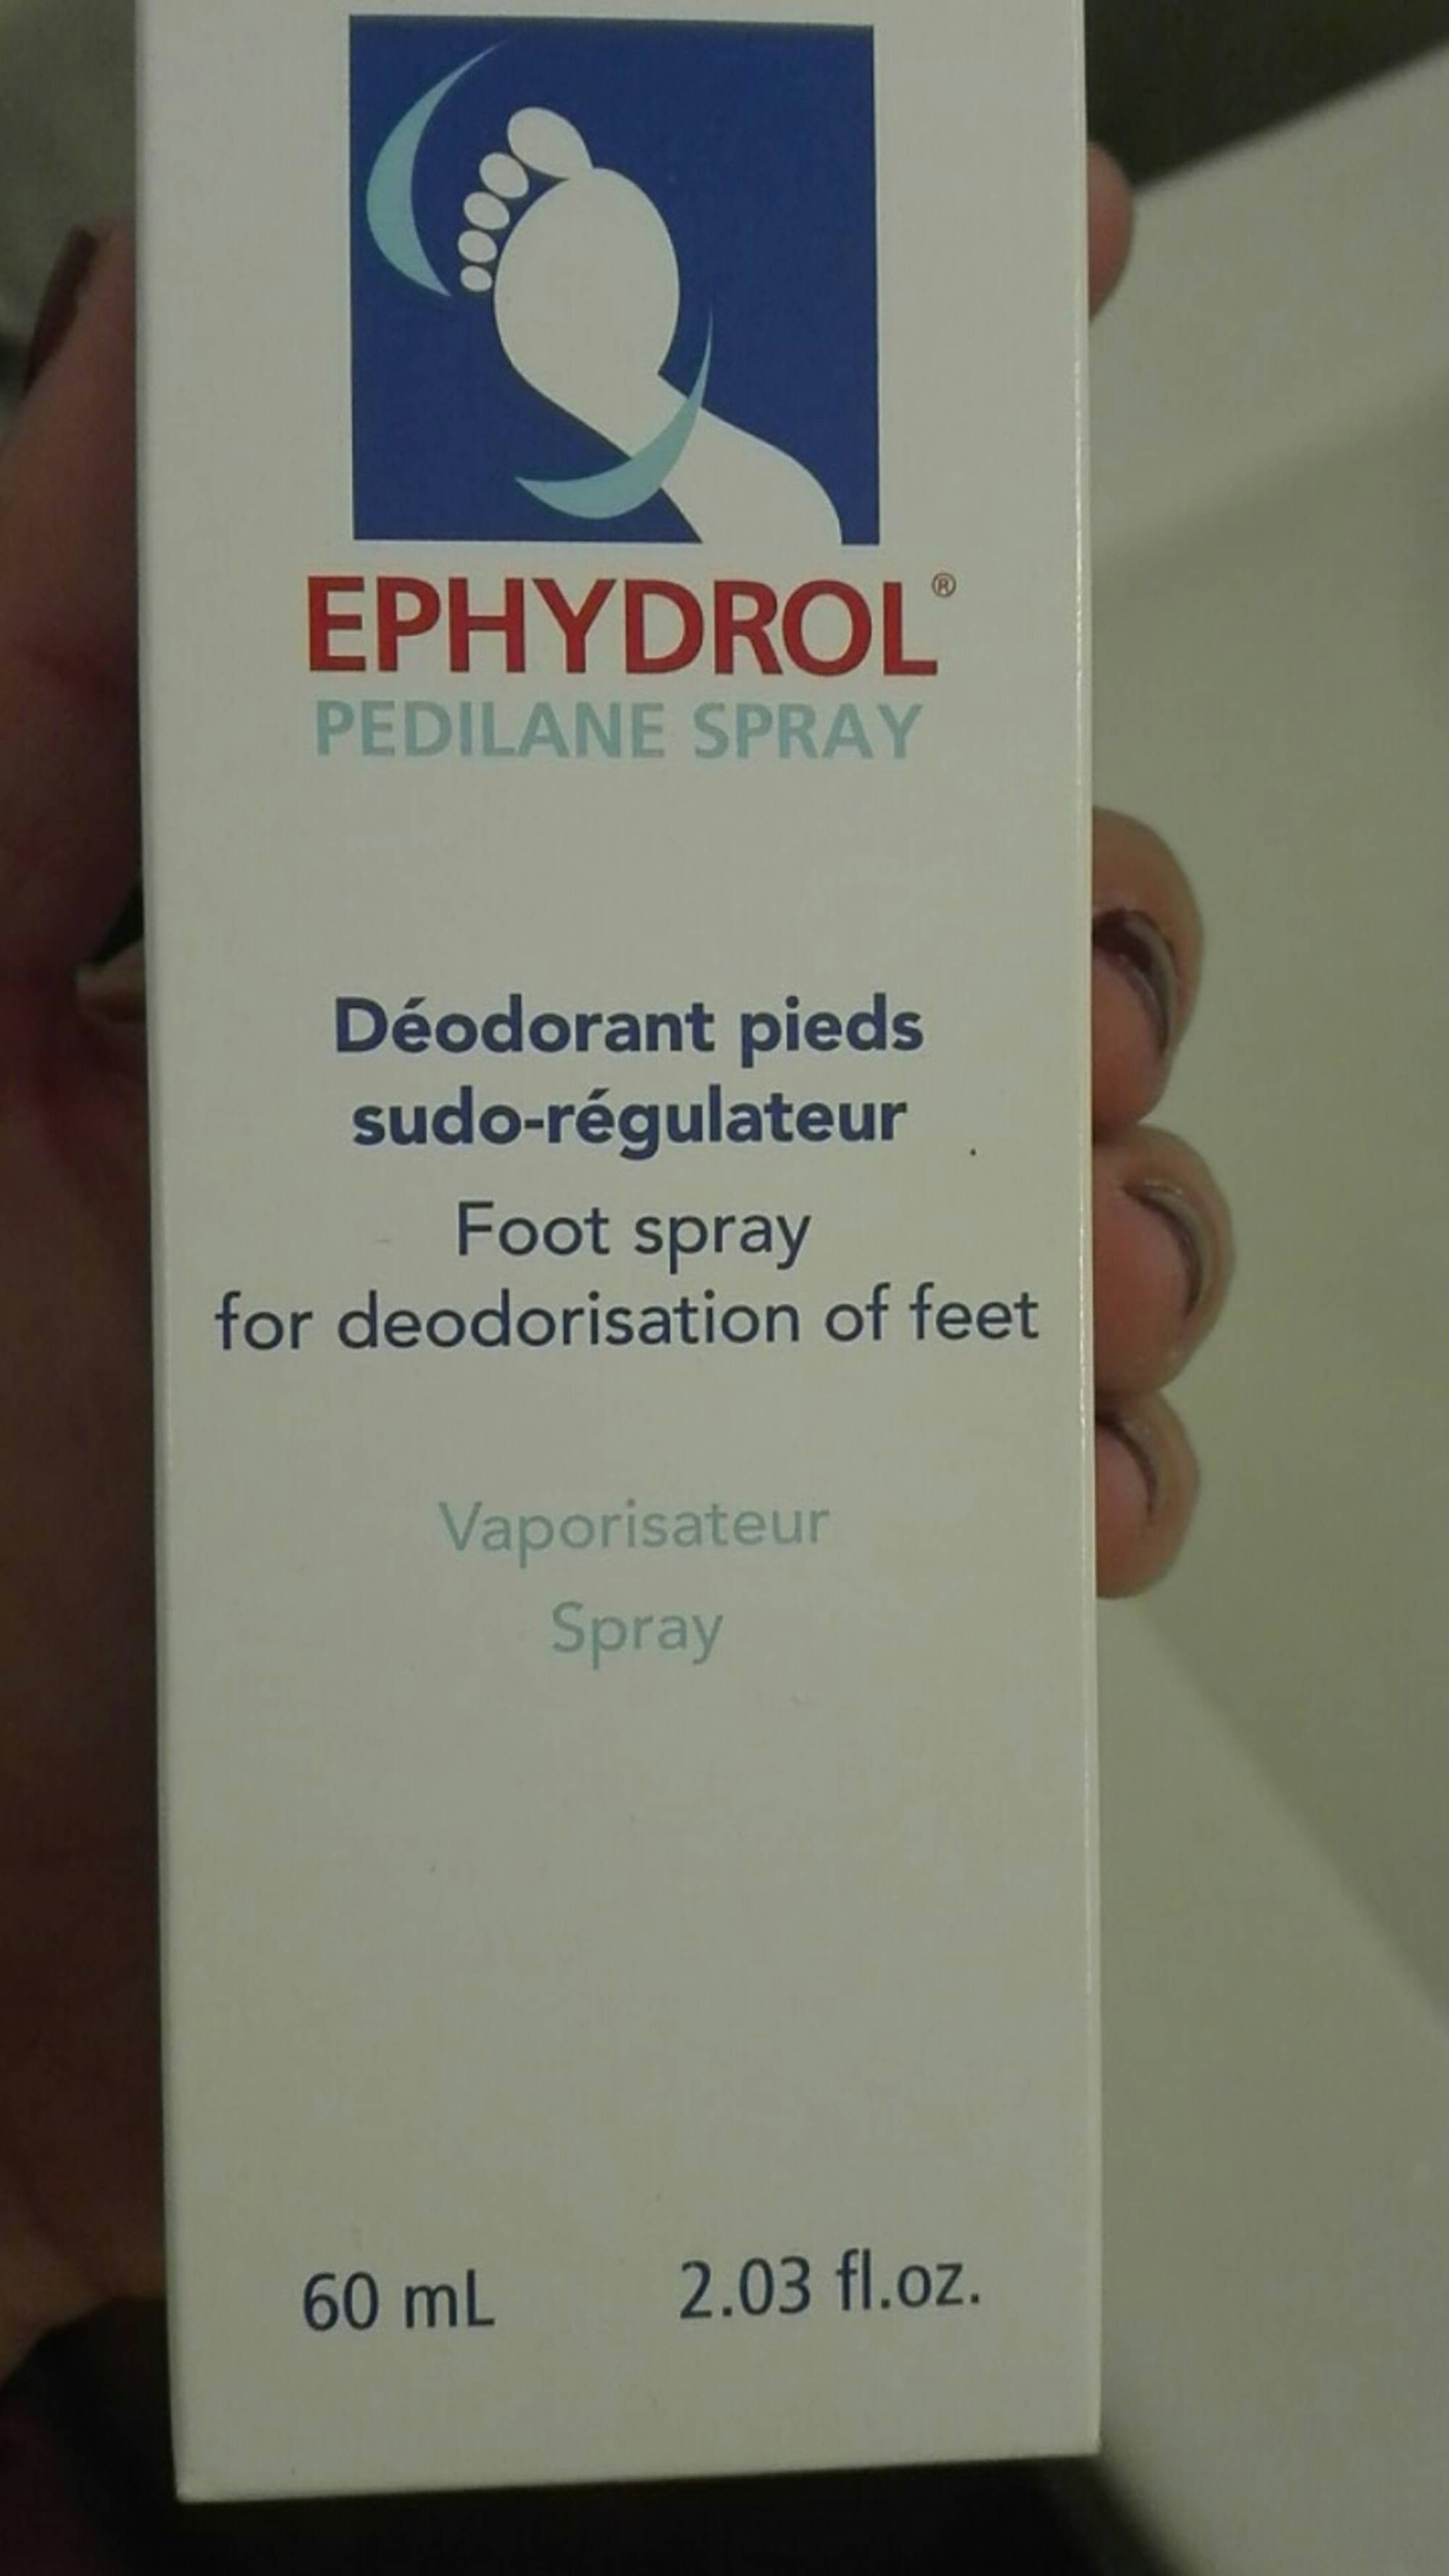 TRADIPHAR - Ephydrol - Pedilane spray - Déodorant pieds sudo-régulateur